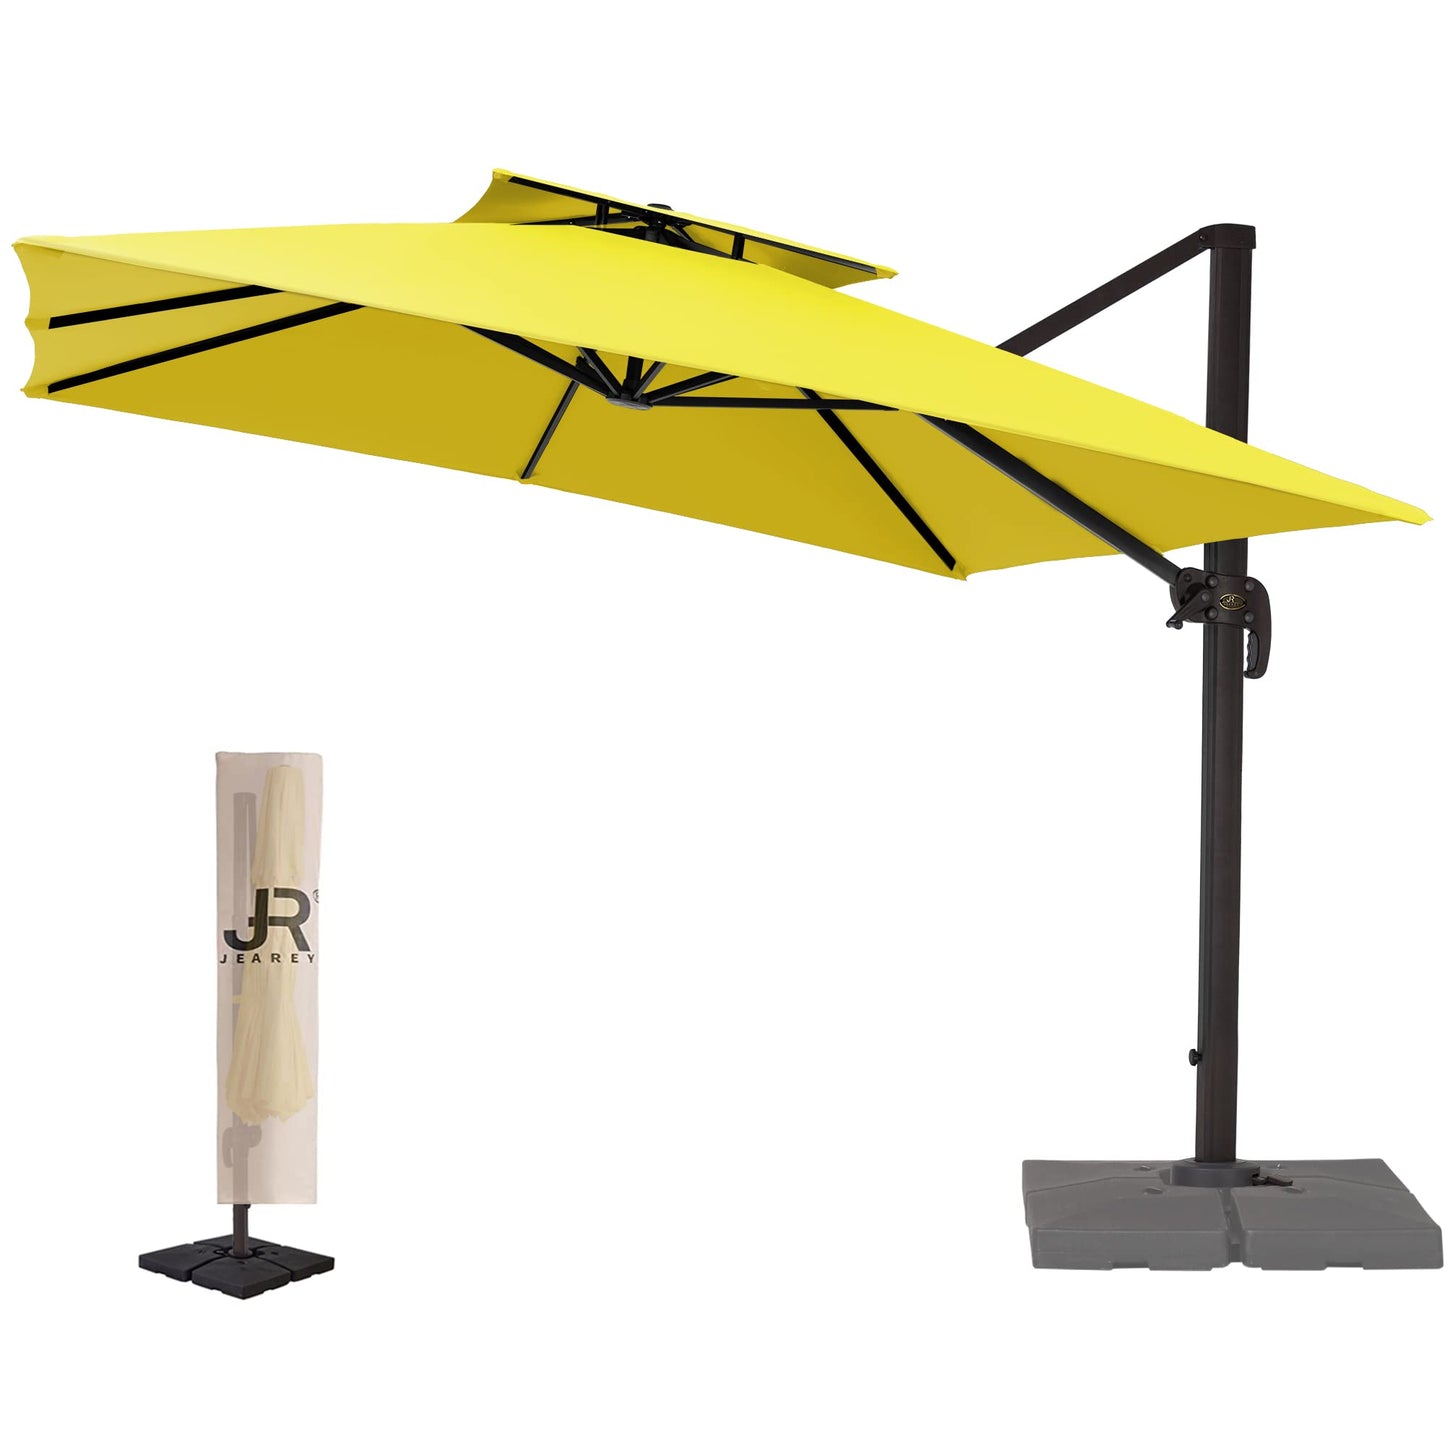 Square Cantilever Patio Umbrella 11FT Yellow